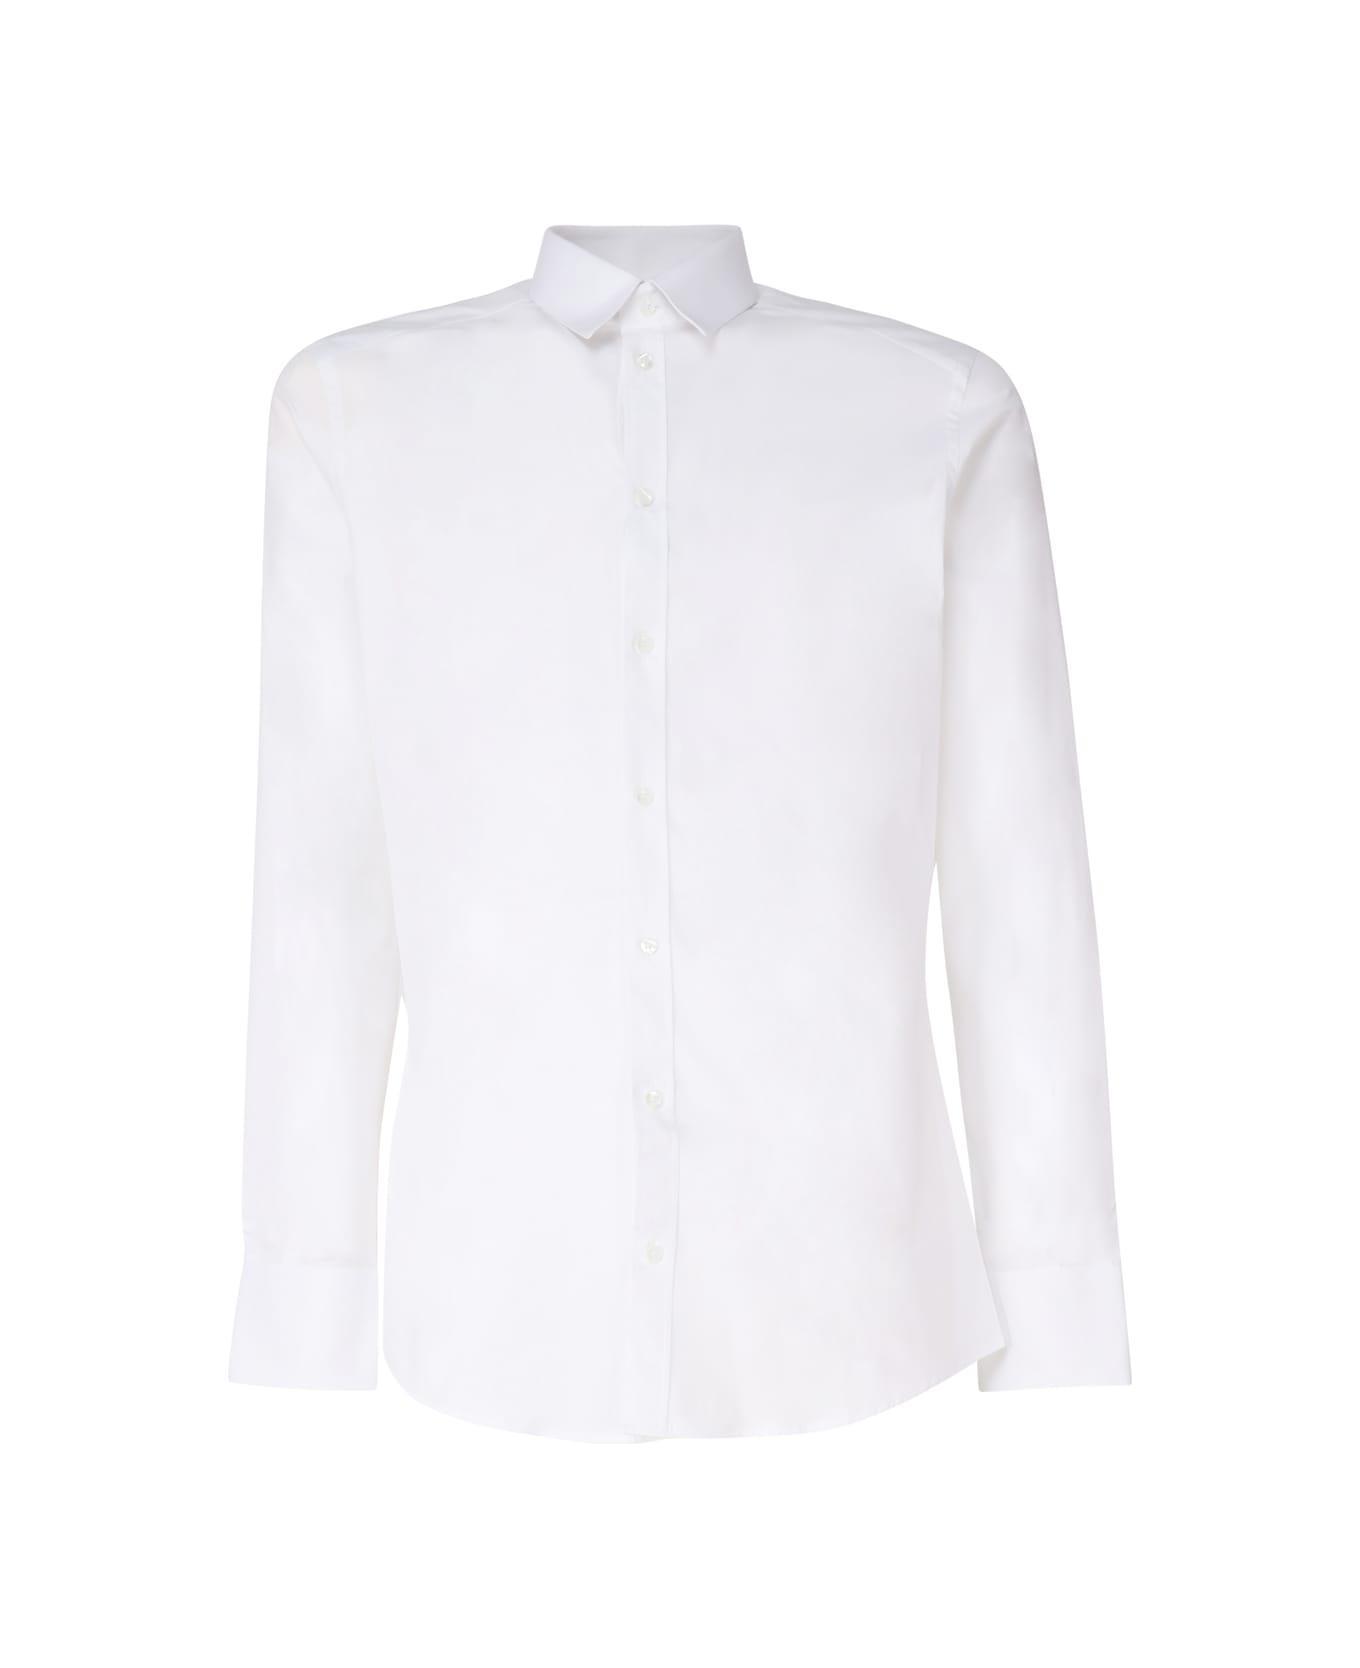 Dolce & Gabbana Shirt Made Of Stretch Cotton Poplin - White